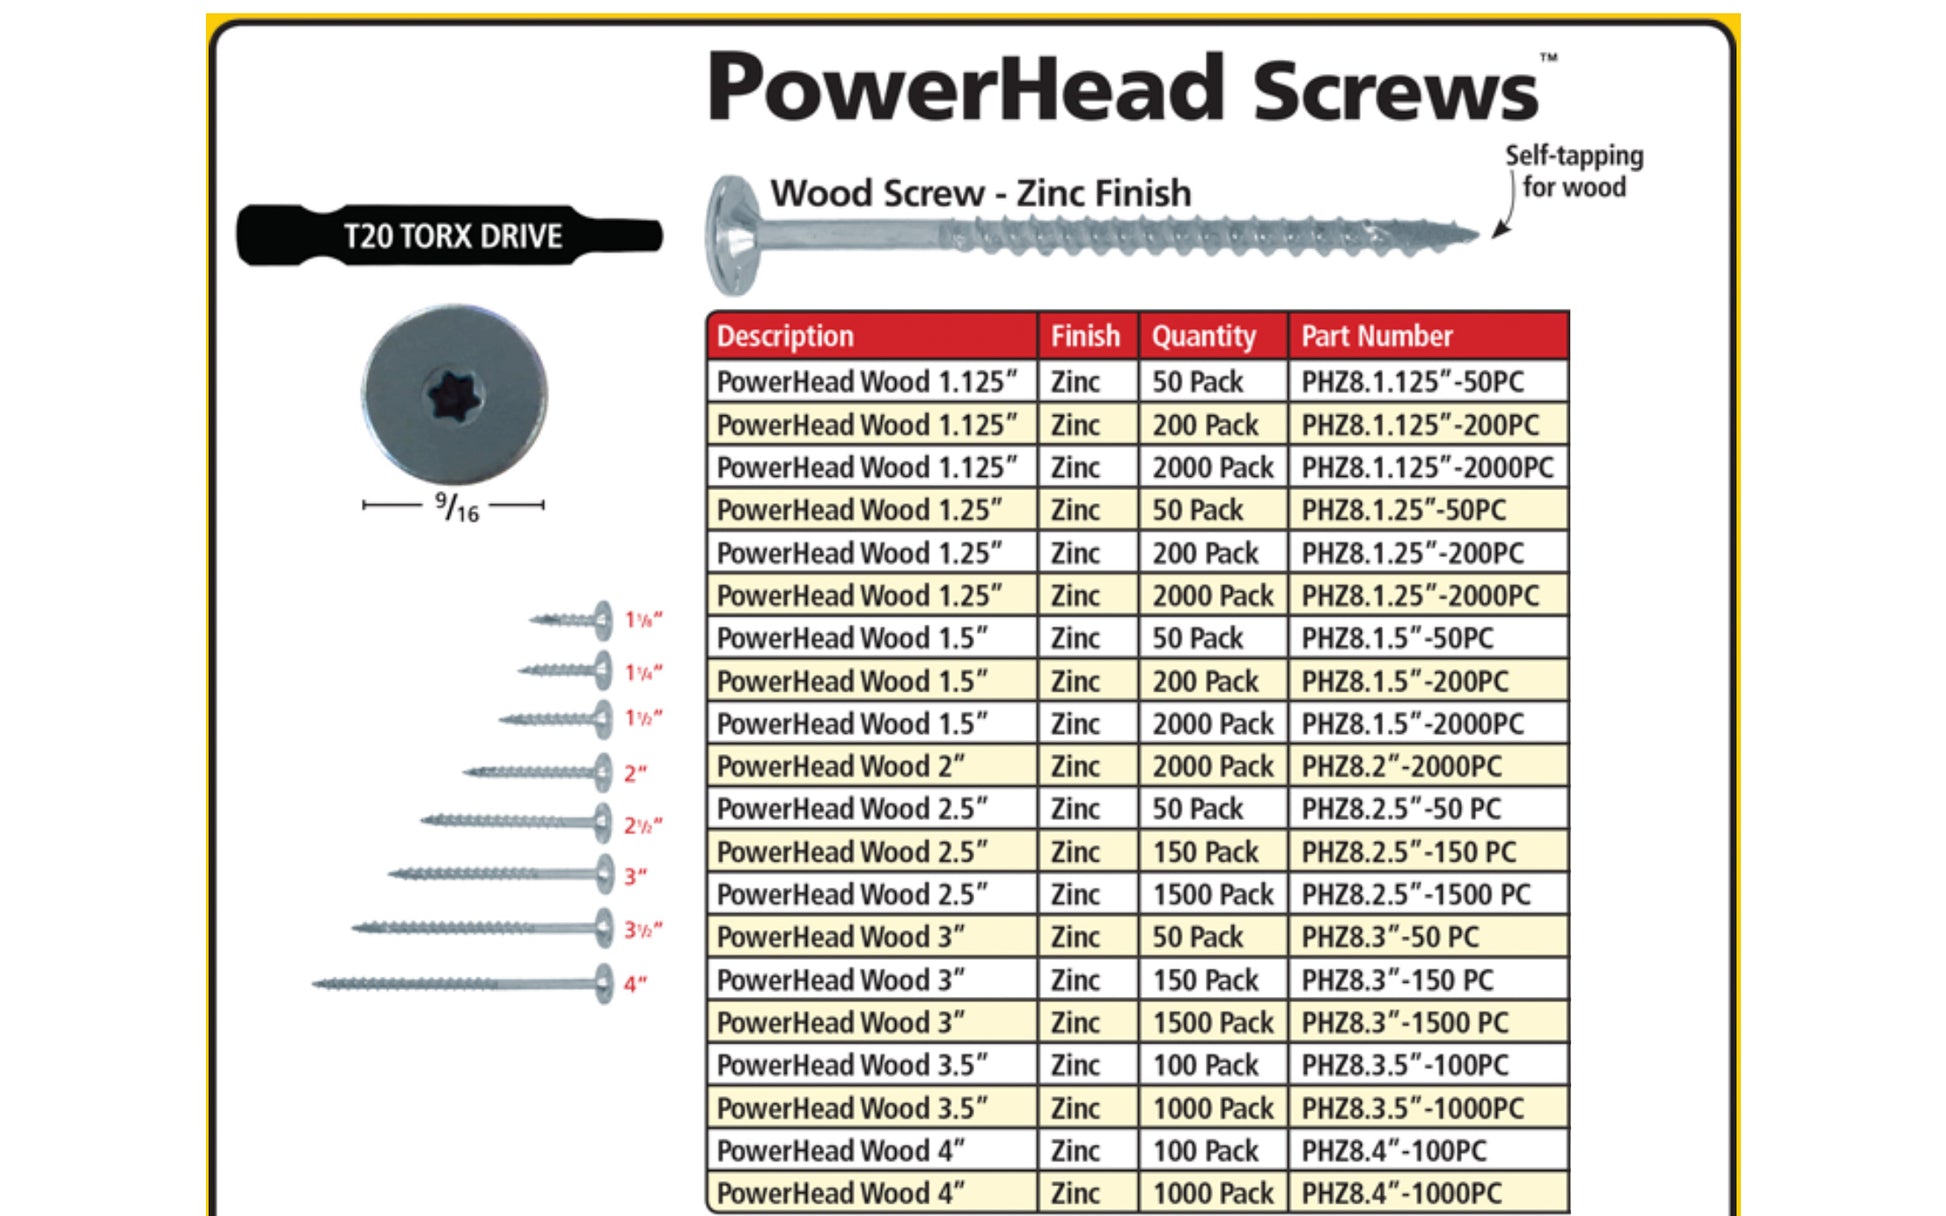 FastCap 2" Powerhead Cabinet Screws - T20 Torx Head ~ 200 Pack - PHZ8.2"-200PC - 9/16" Diameter Head